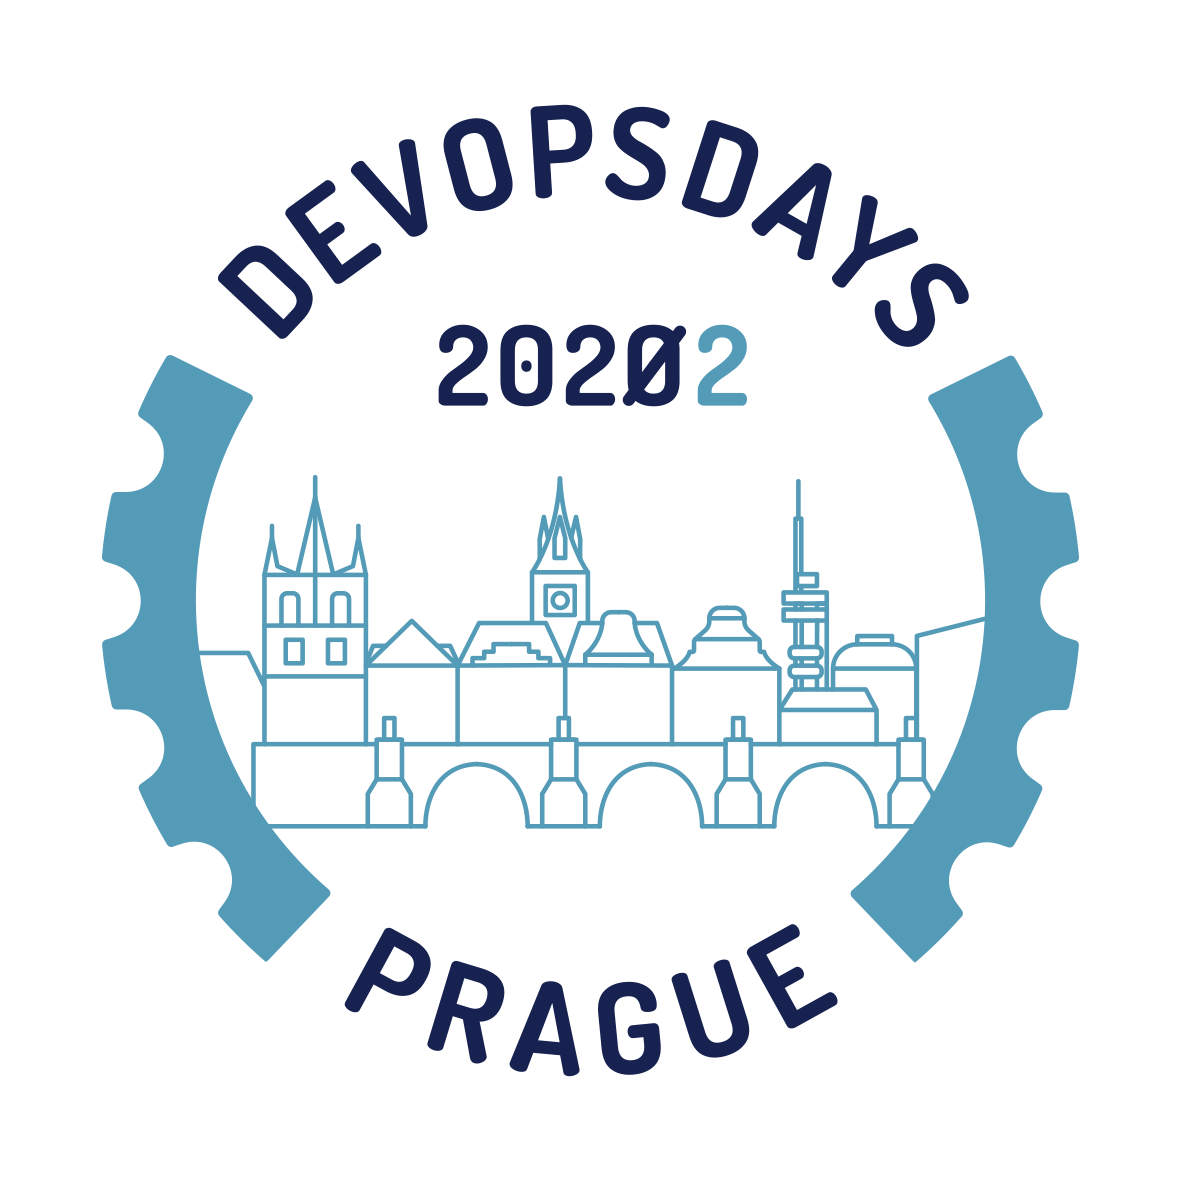 devopsdays Prague 2022